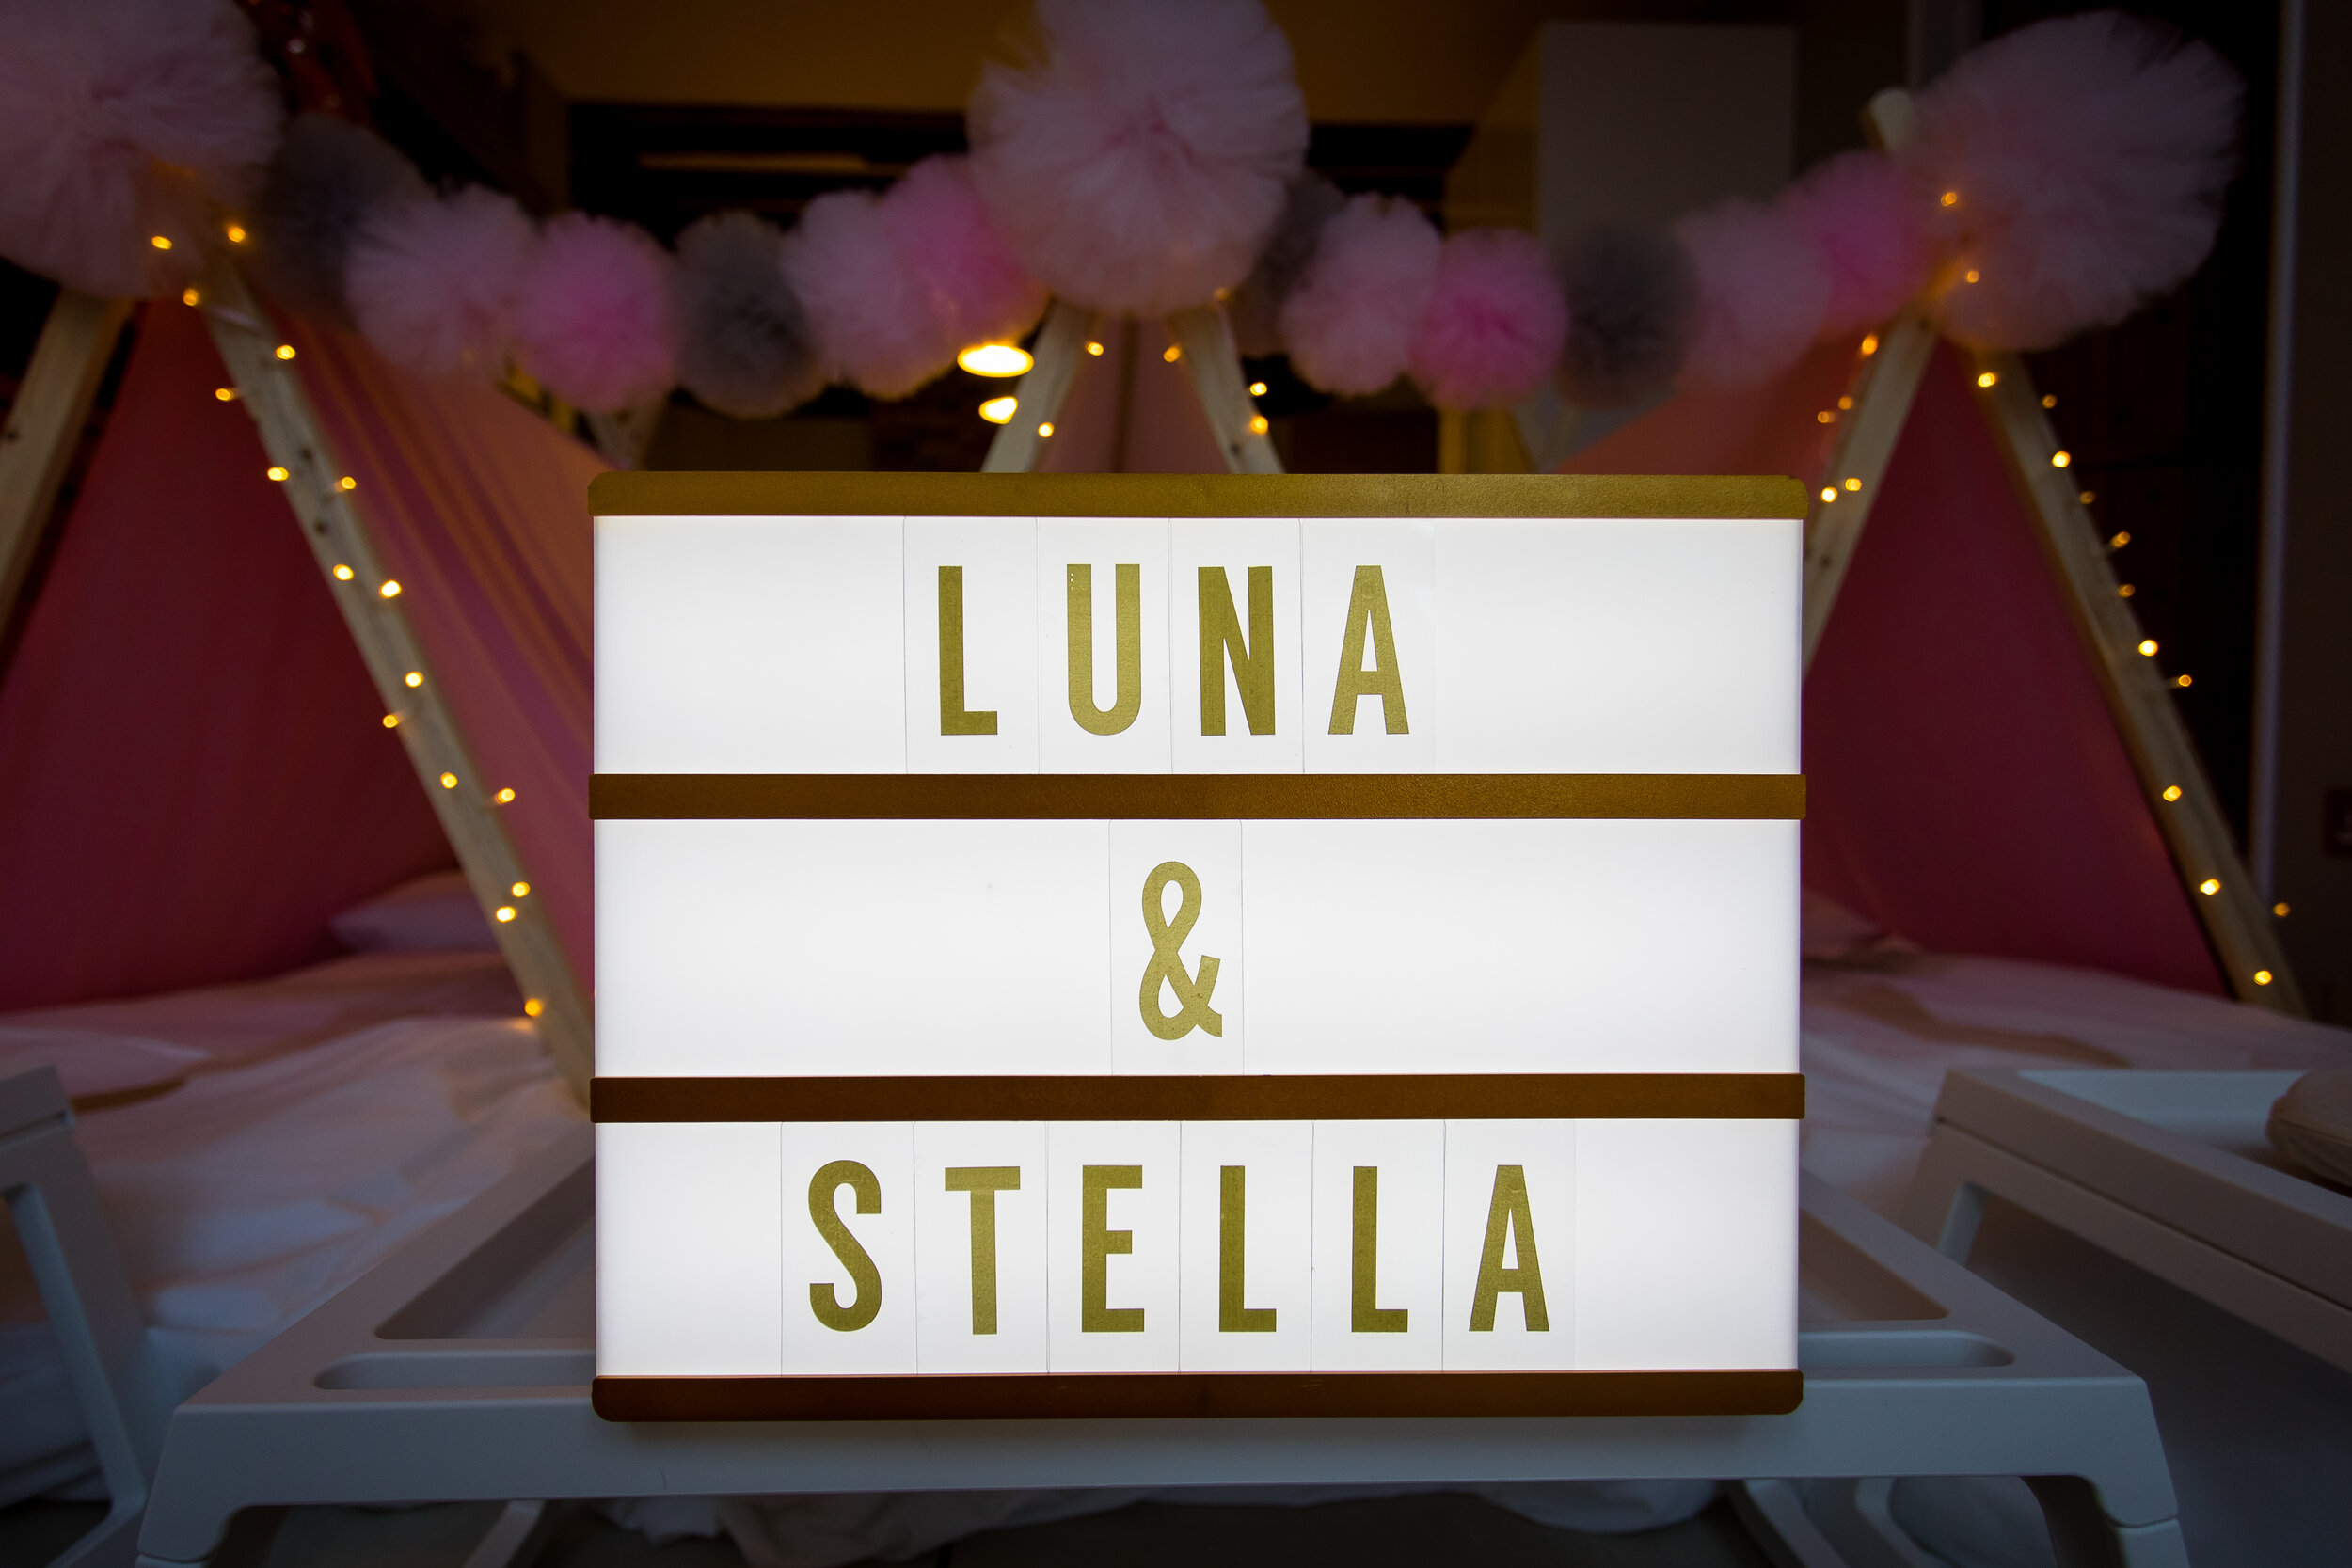 Luna & Stella Log and Tents - Francesca - 08-06-18 - 0057.jpg